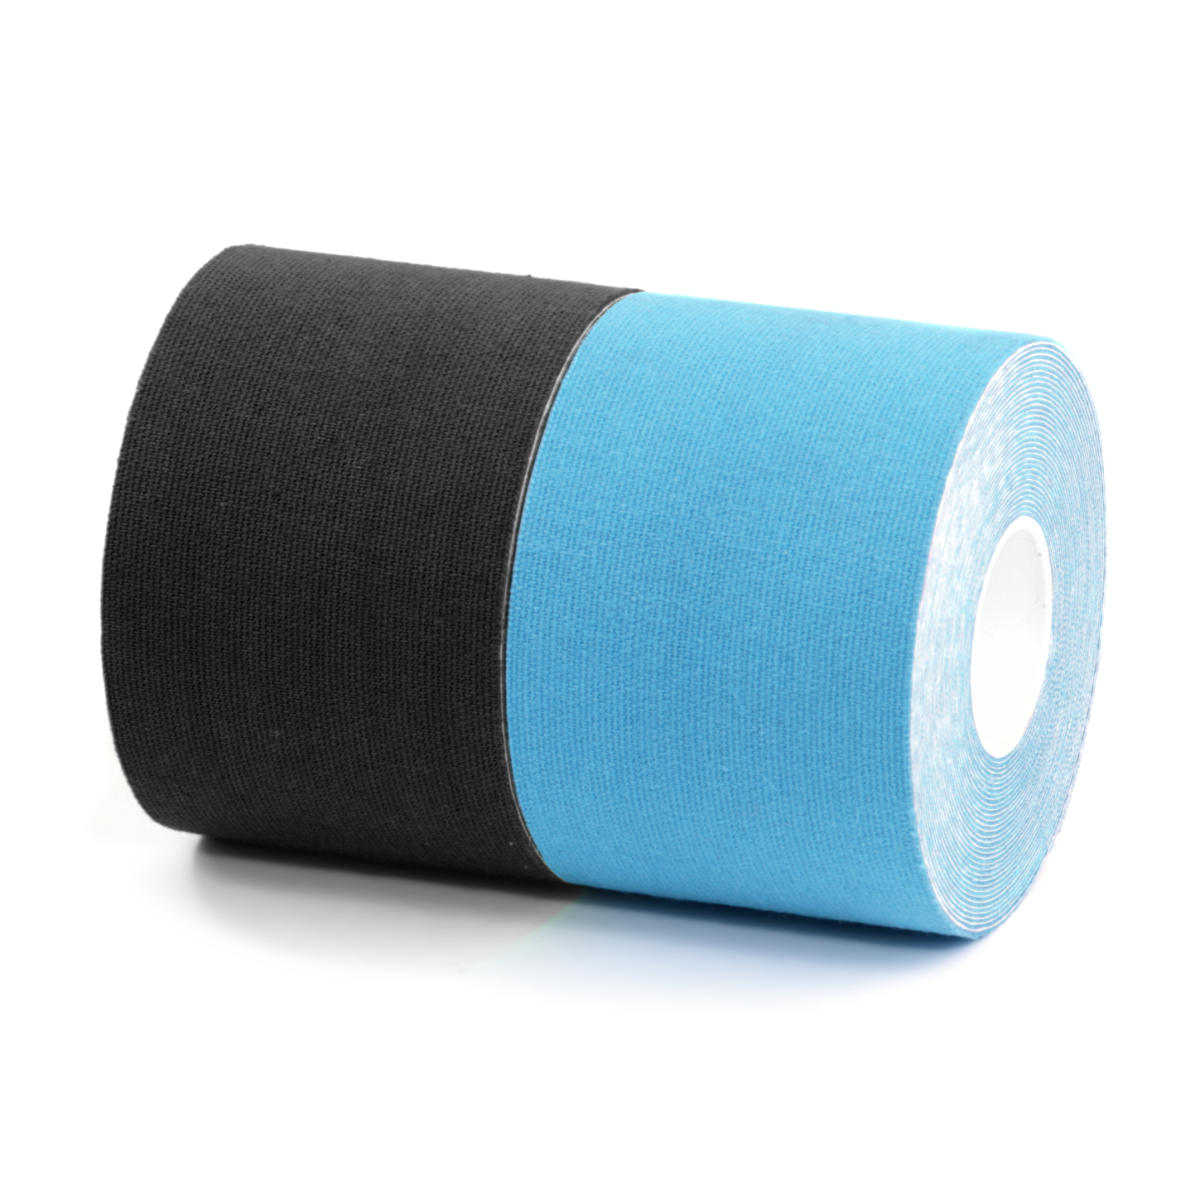 BRONVIT Sport Kinesio Tape set 2 x 5cm x 6m černá + modrá